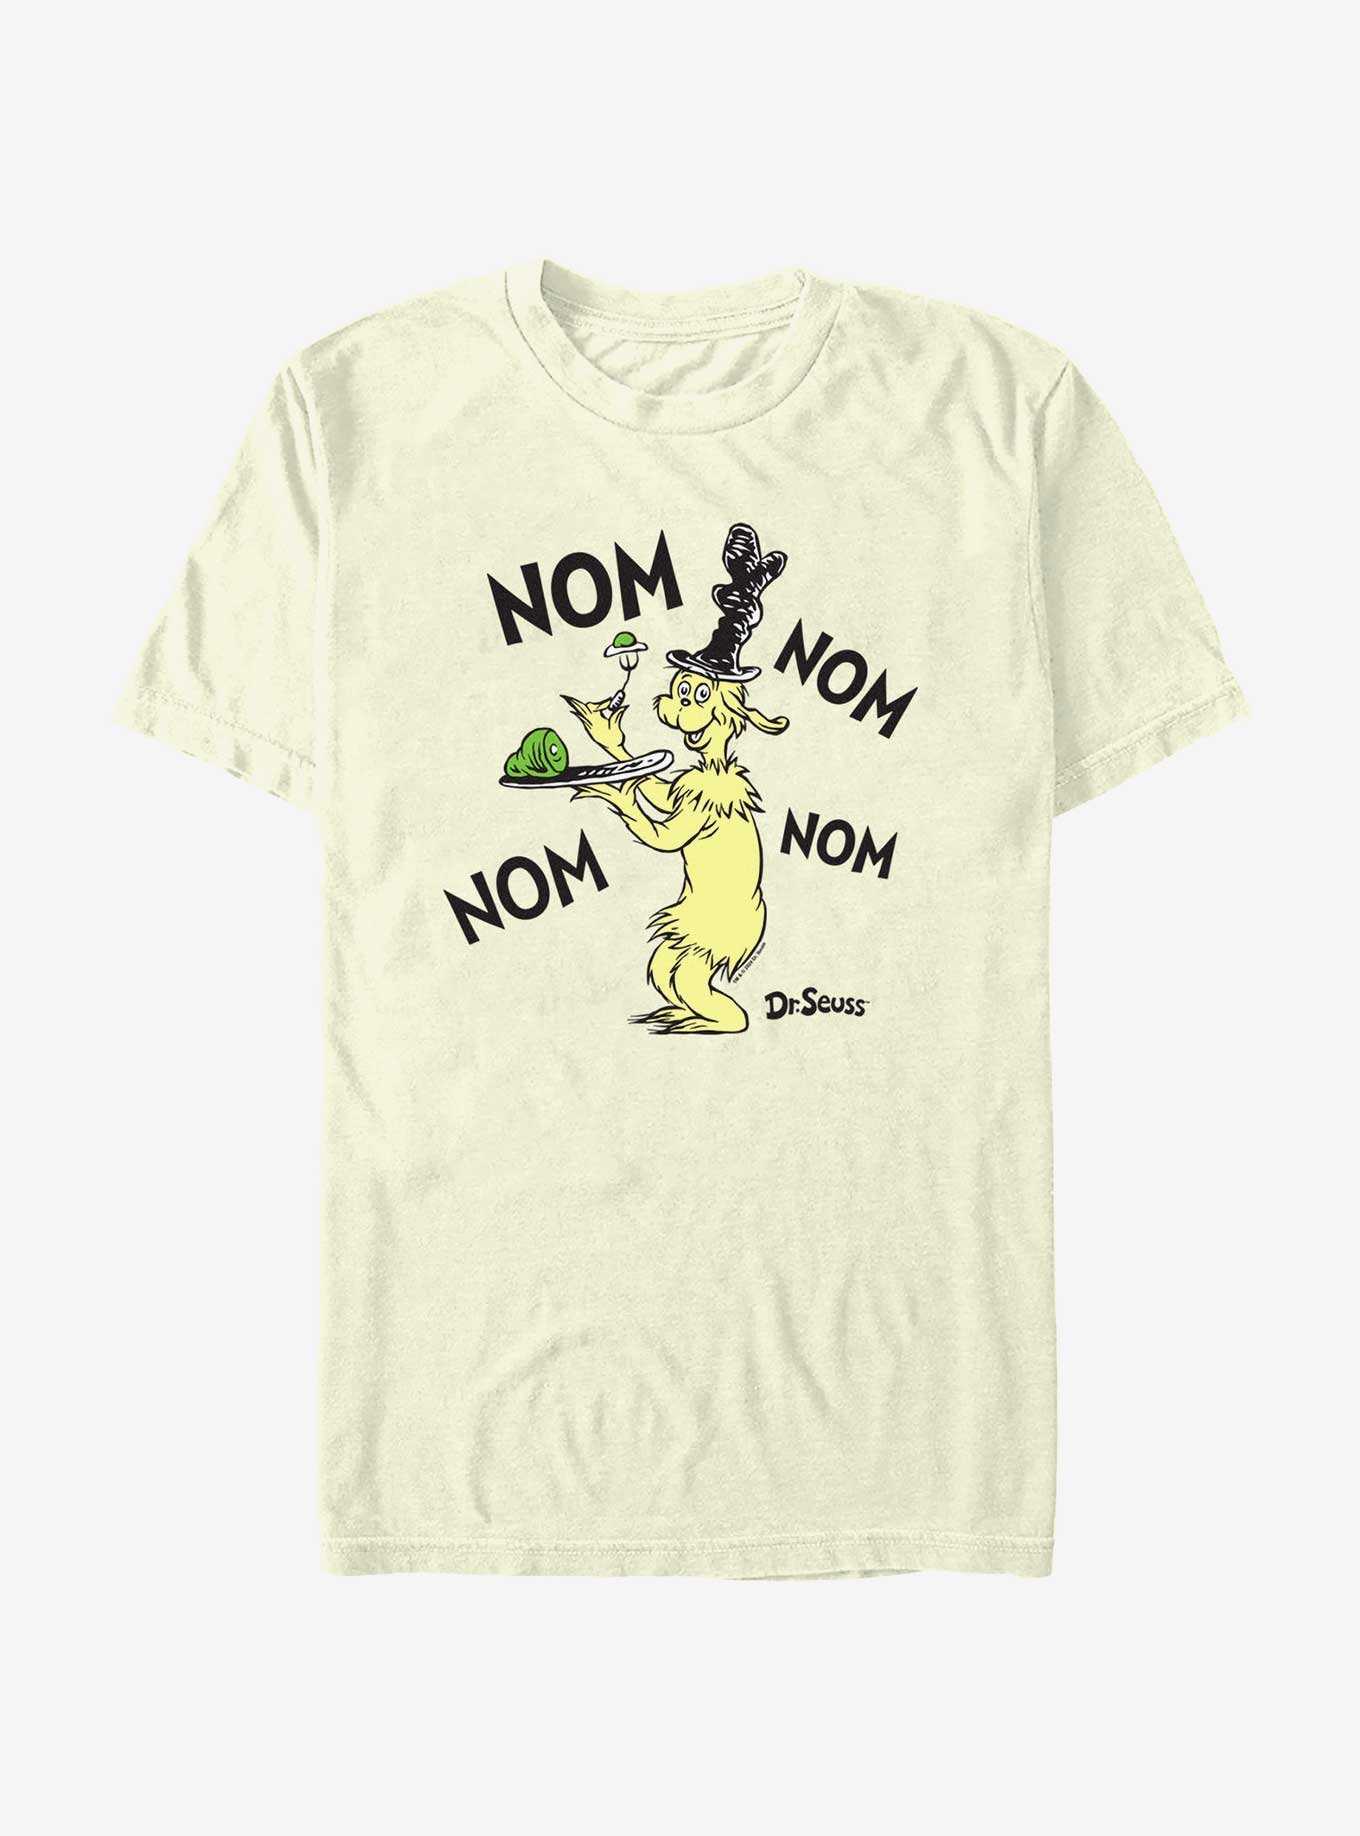 Dr. Seuss Nom Nom Nom Nom T-Shirt, , hi-res